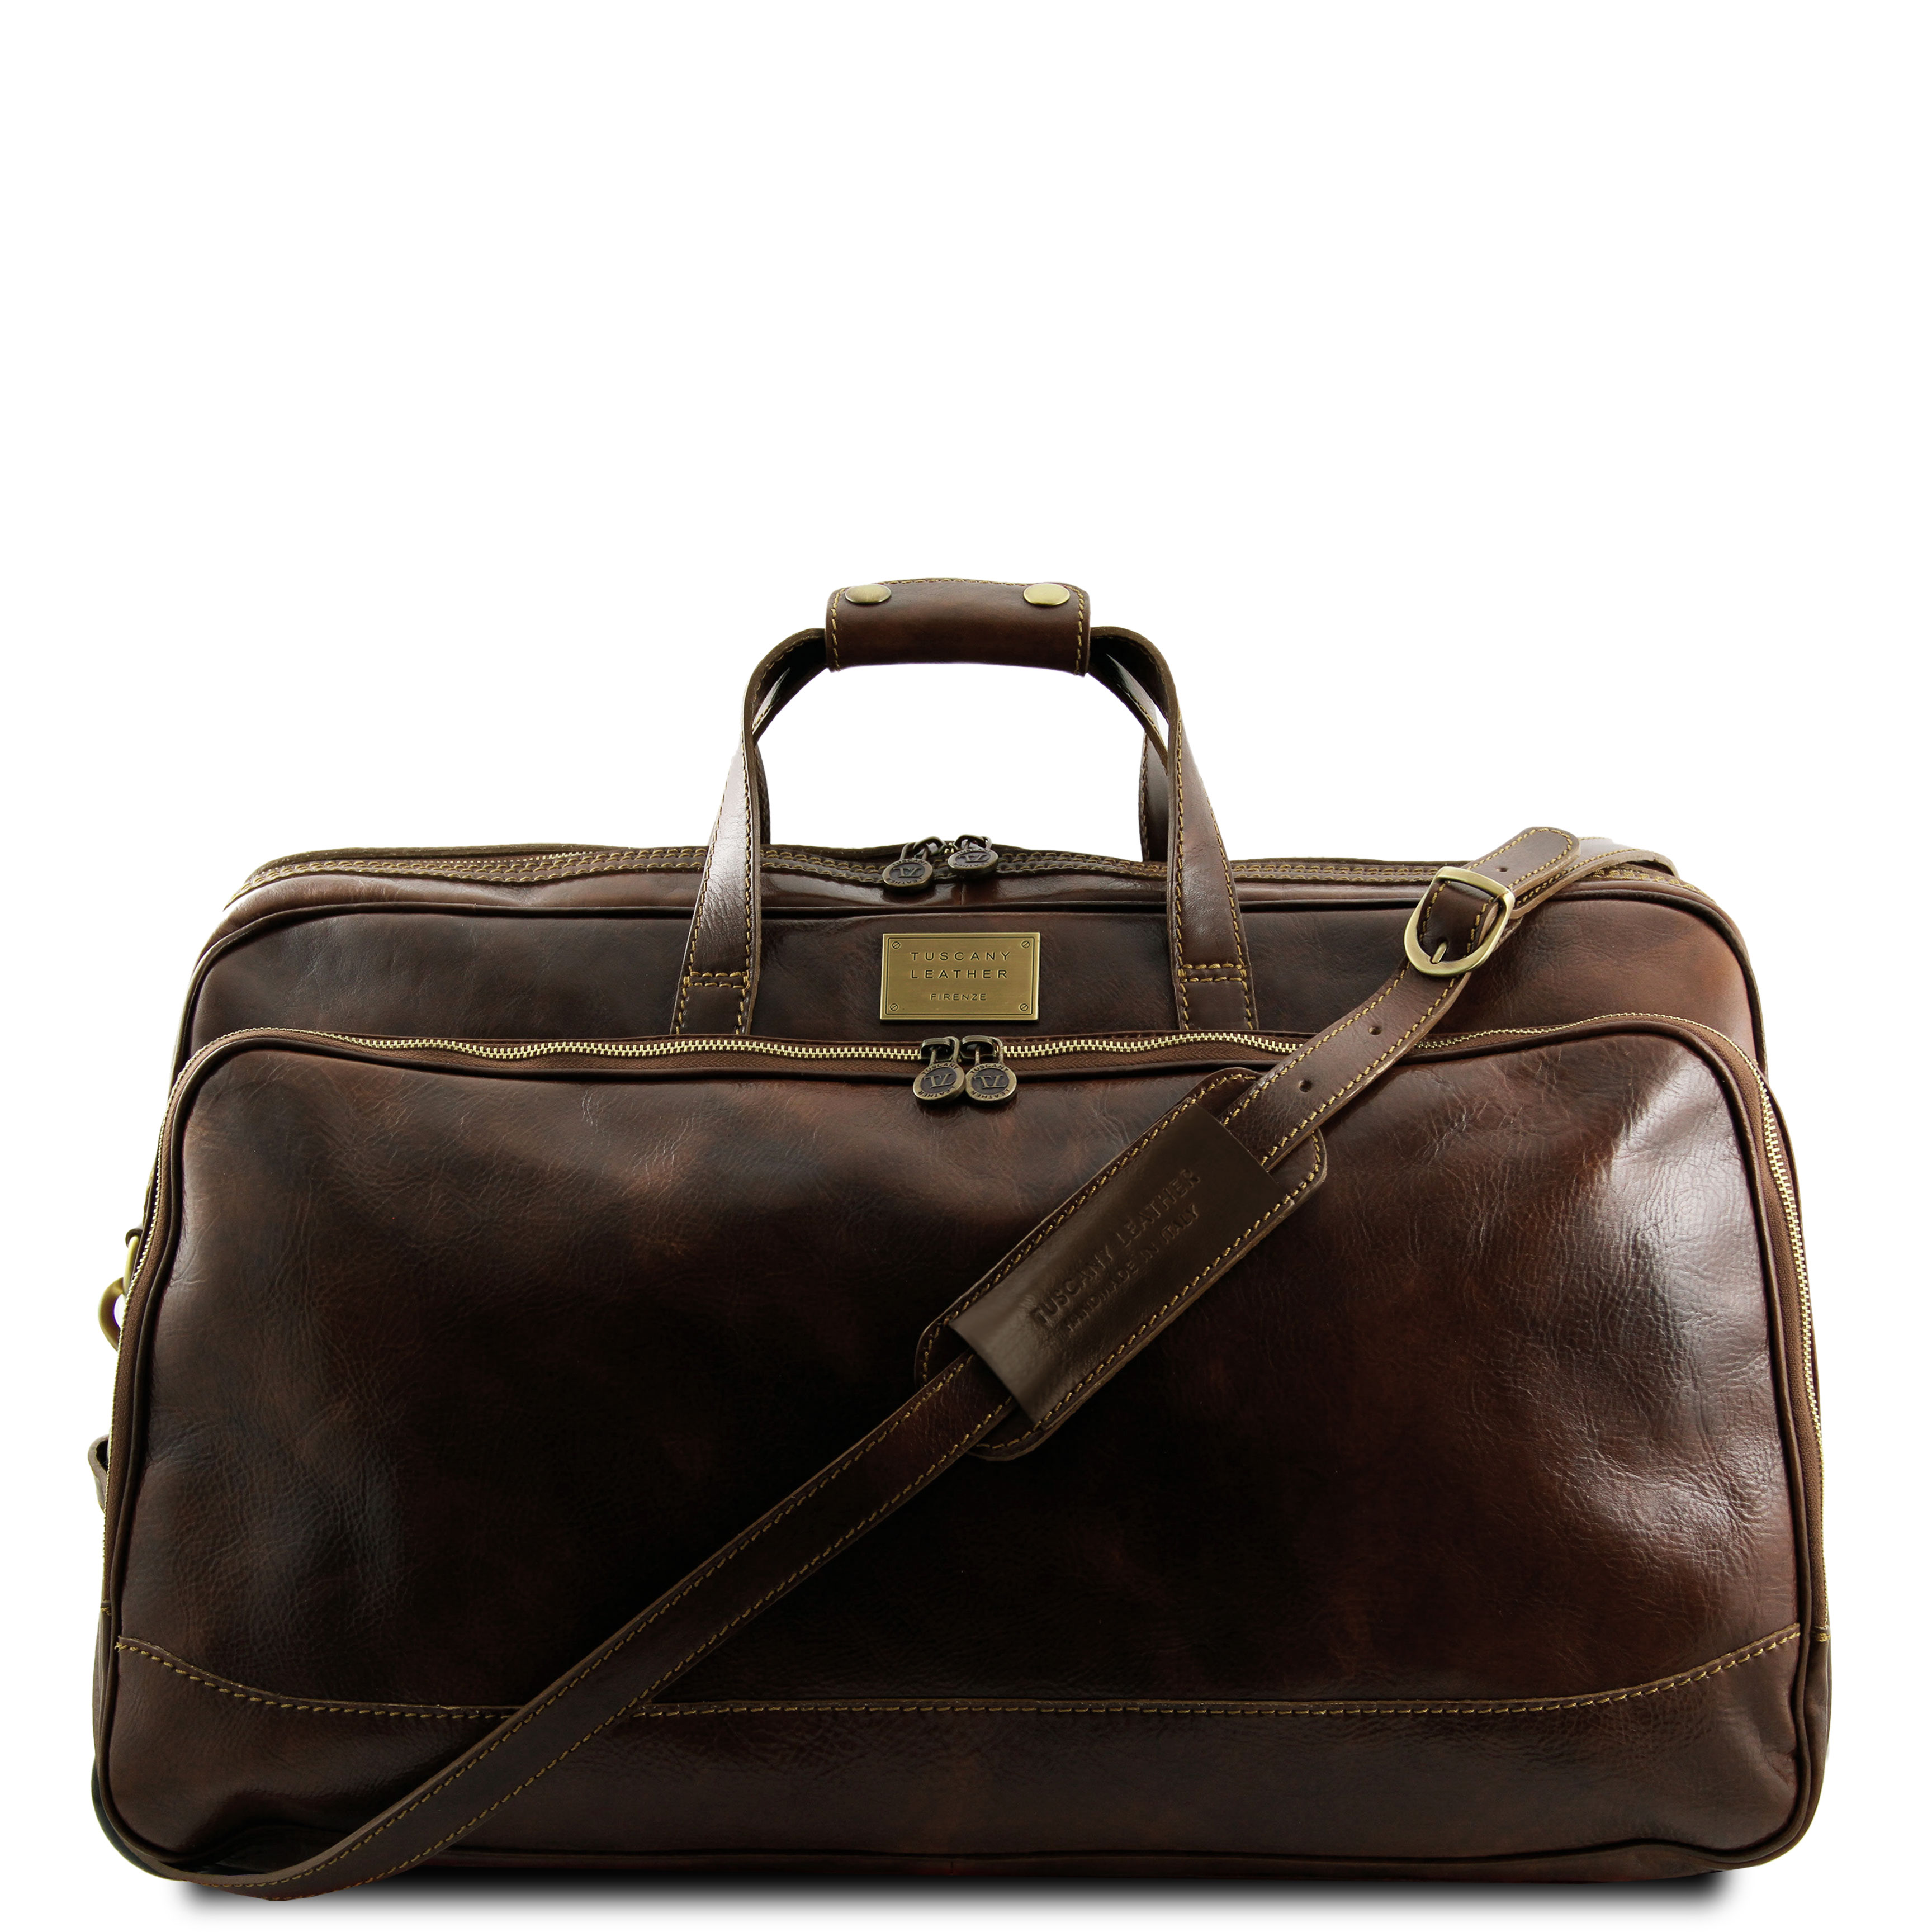 Bora Bora Trolley leather bag - Small size Dark Brown